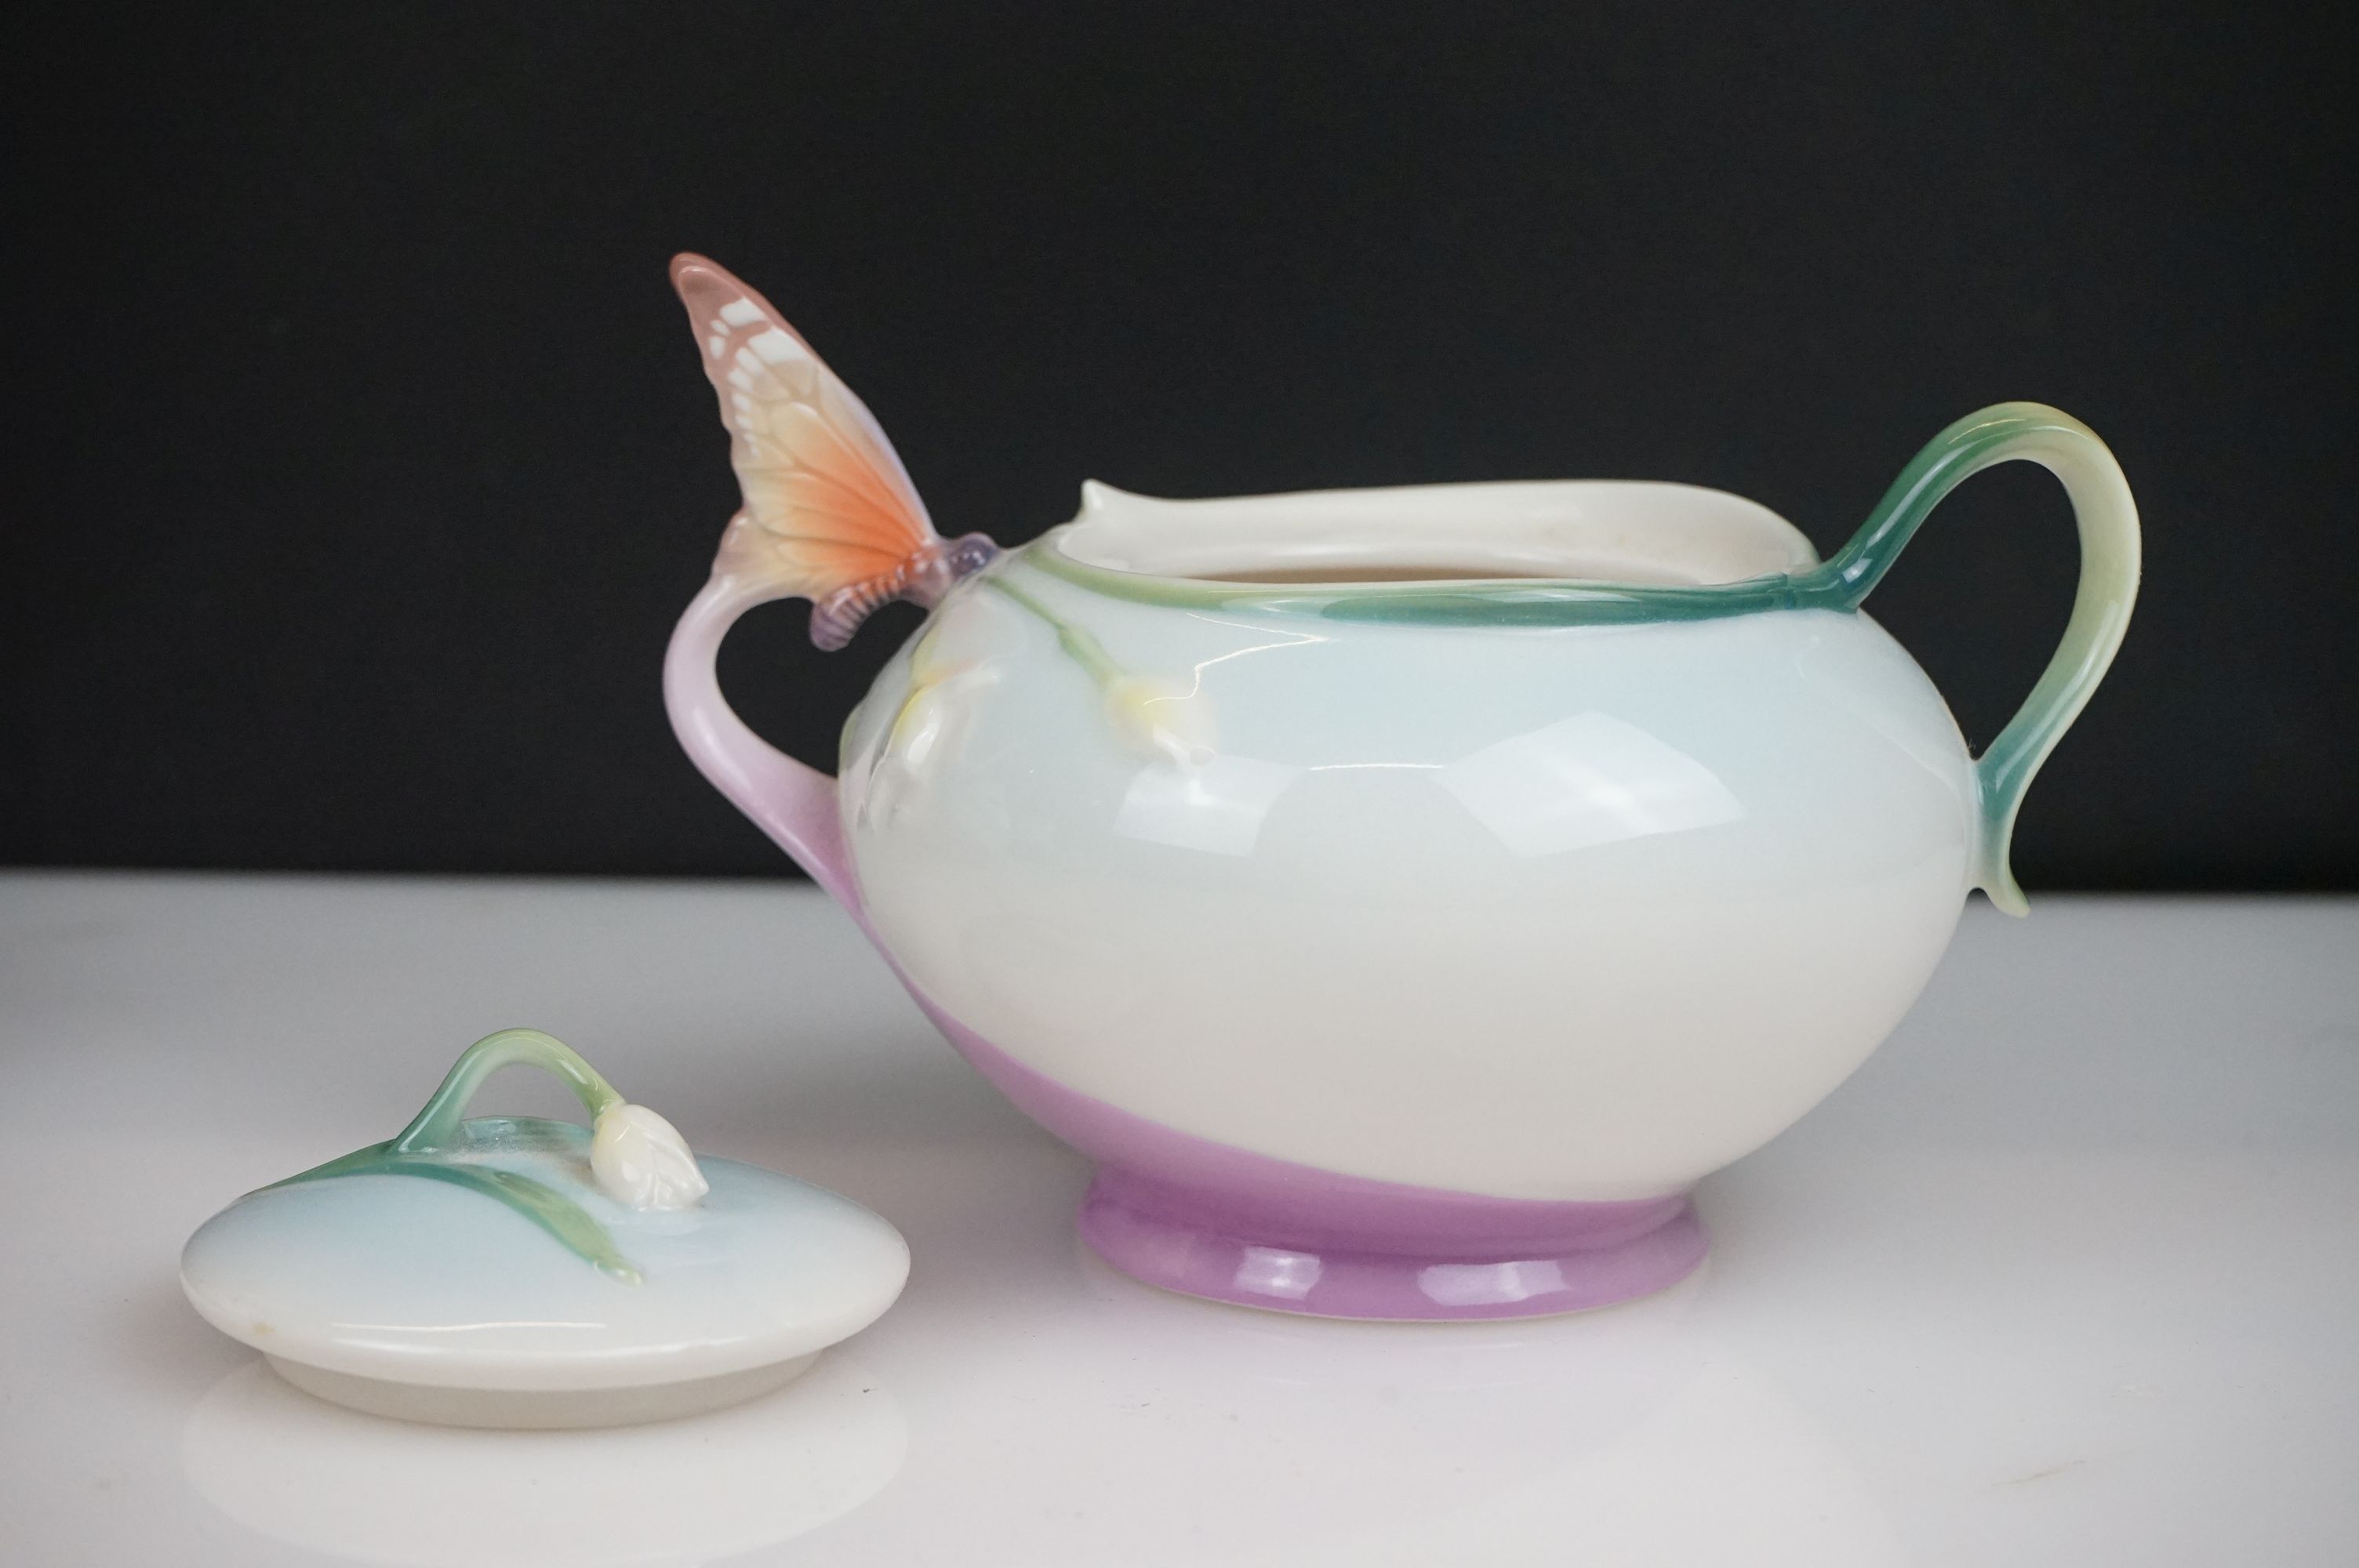 Franz Porcelain ' Papillon Butterfly ' Tea Ware including Boxed Teapot, Sugar Bowl, Milk Jug, Cup, - Image 3 of 7